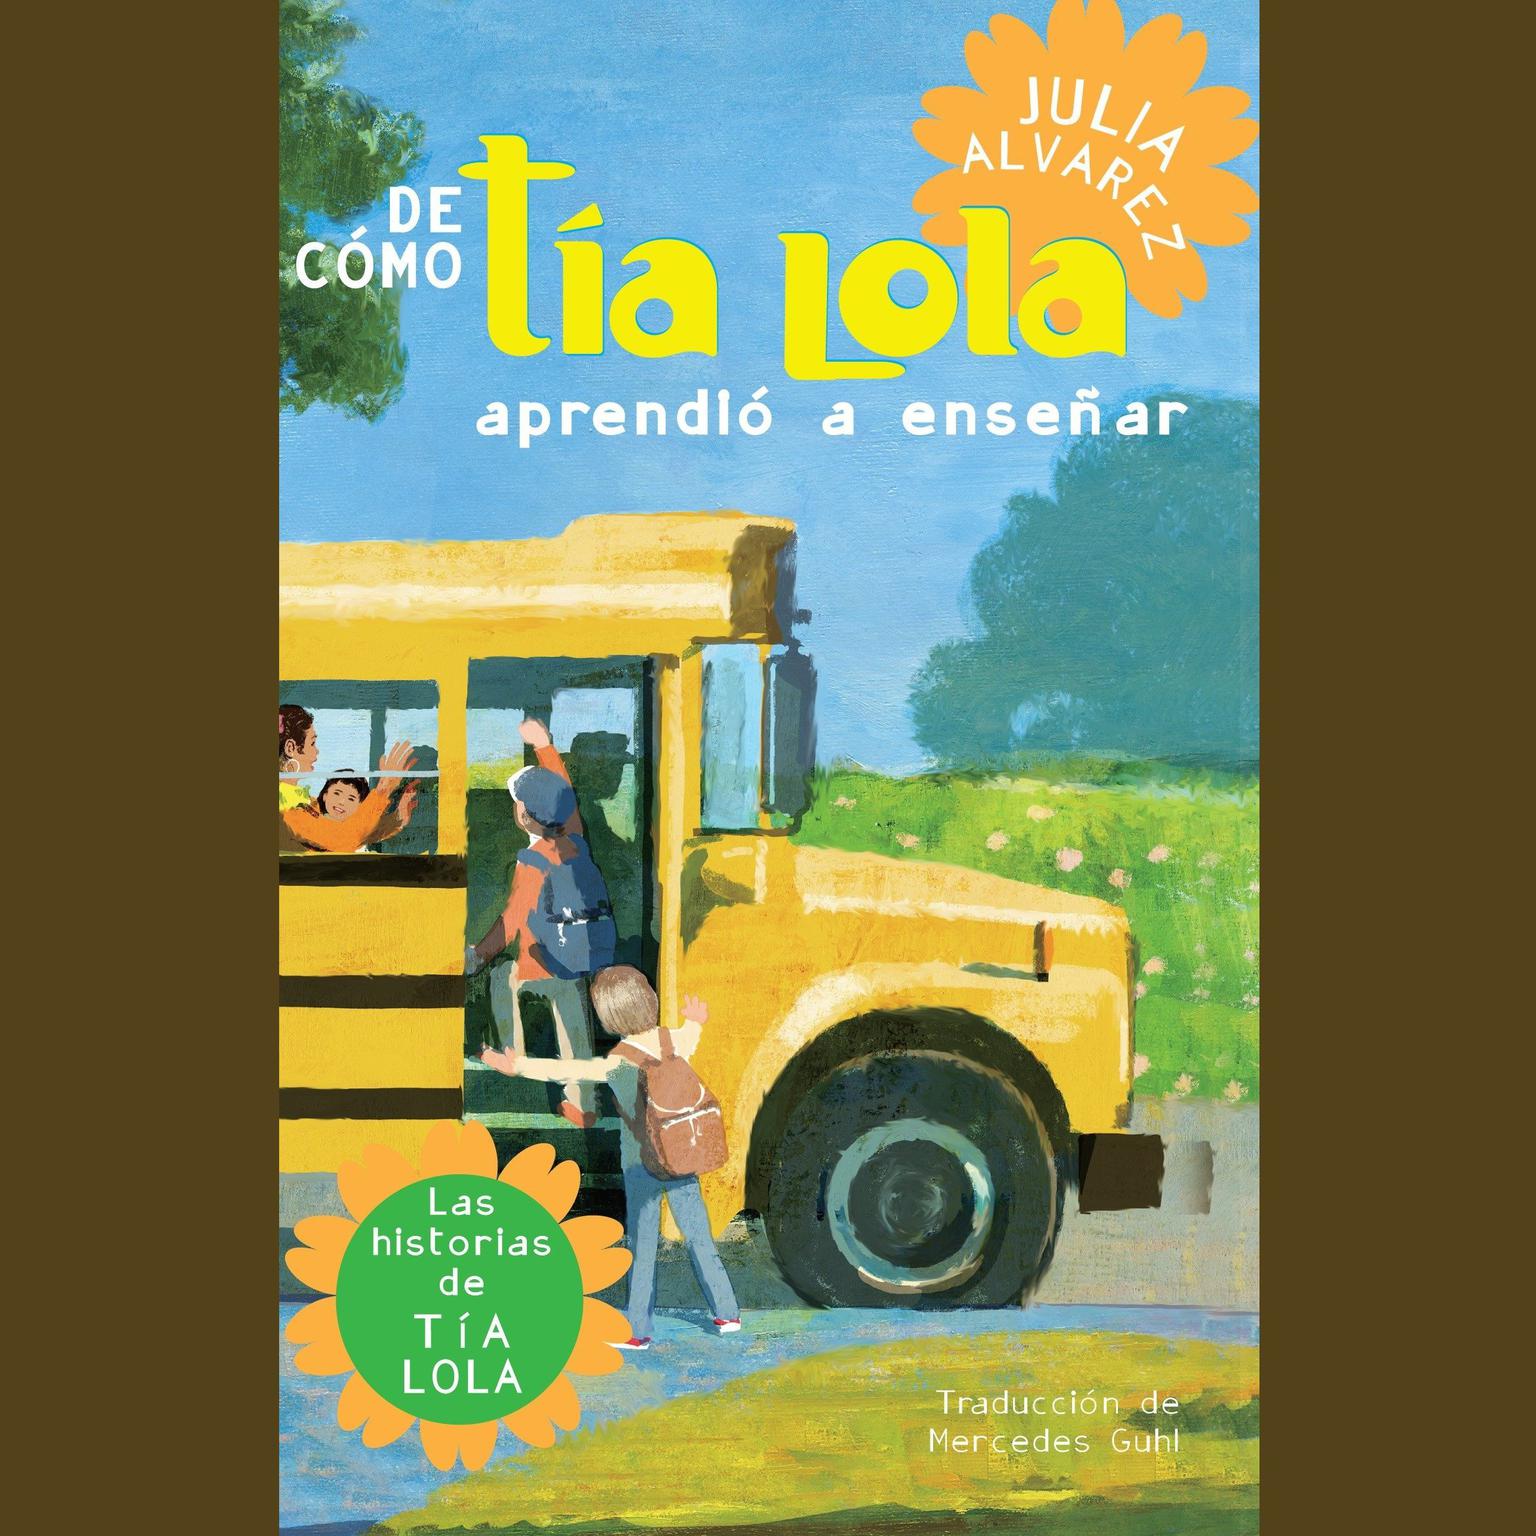 De como tia Lola aprendio a ensenar (How Aunt Lola Learned to Teach Spanish Edition) Audiobook, by Julia Alvarez